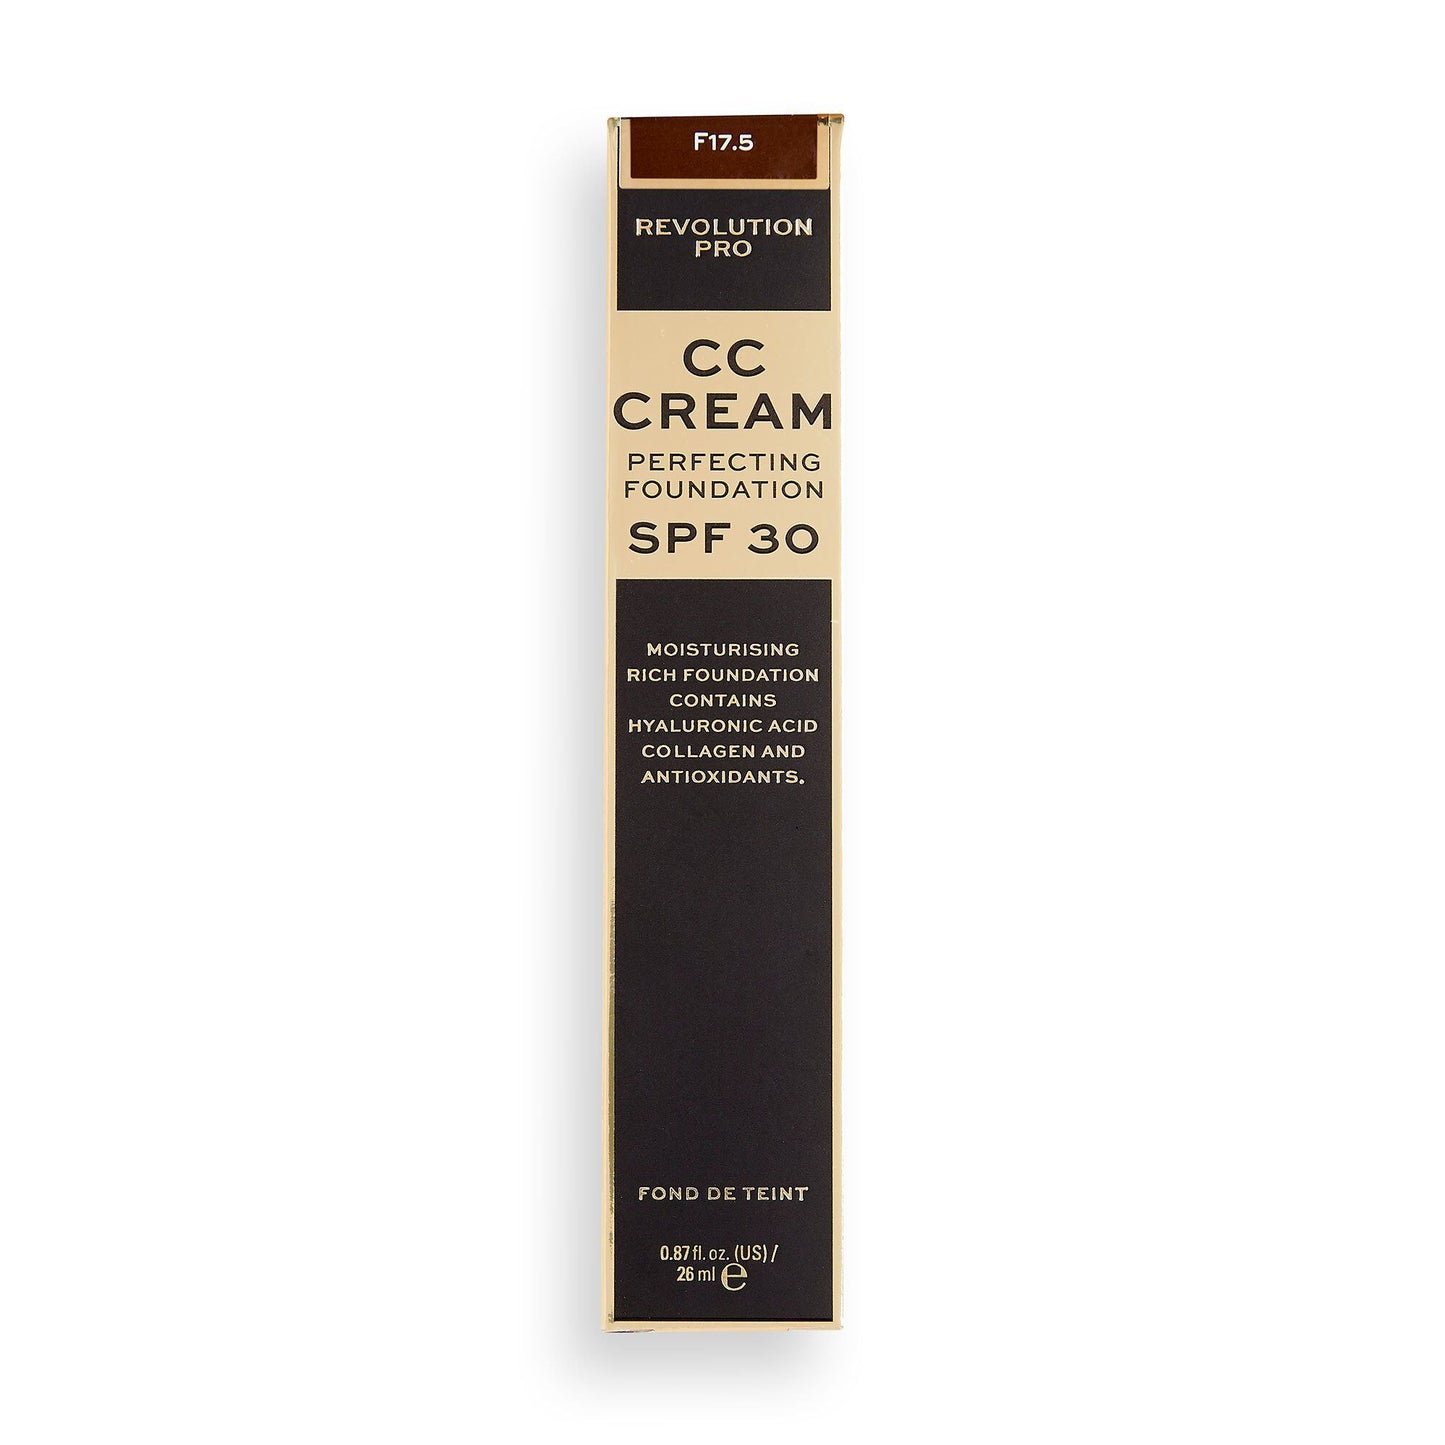 Rev Pro CC Cream Perfecting SPF 30 F17.5